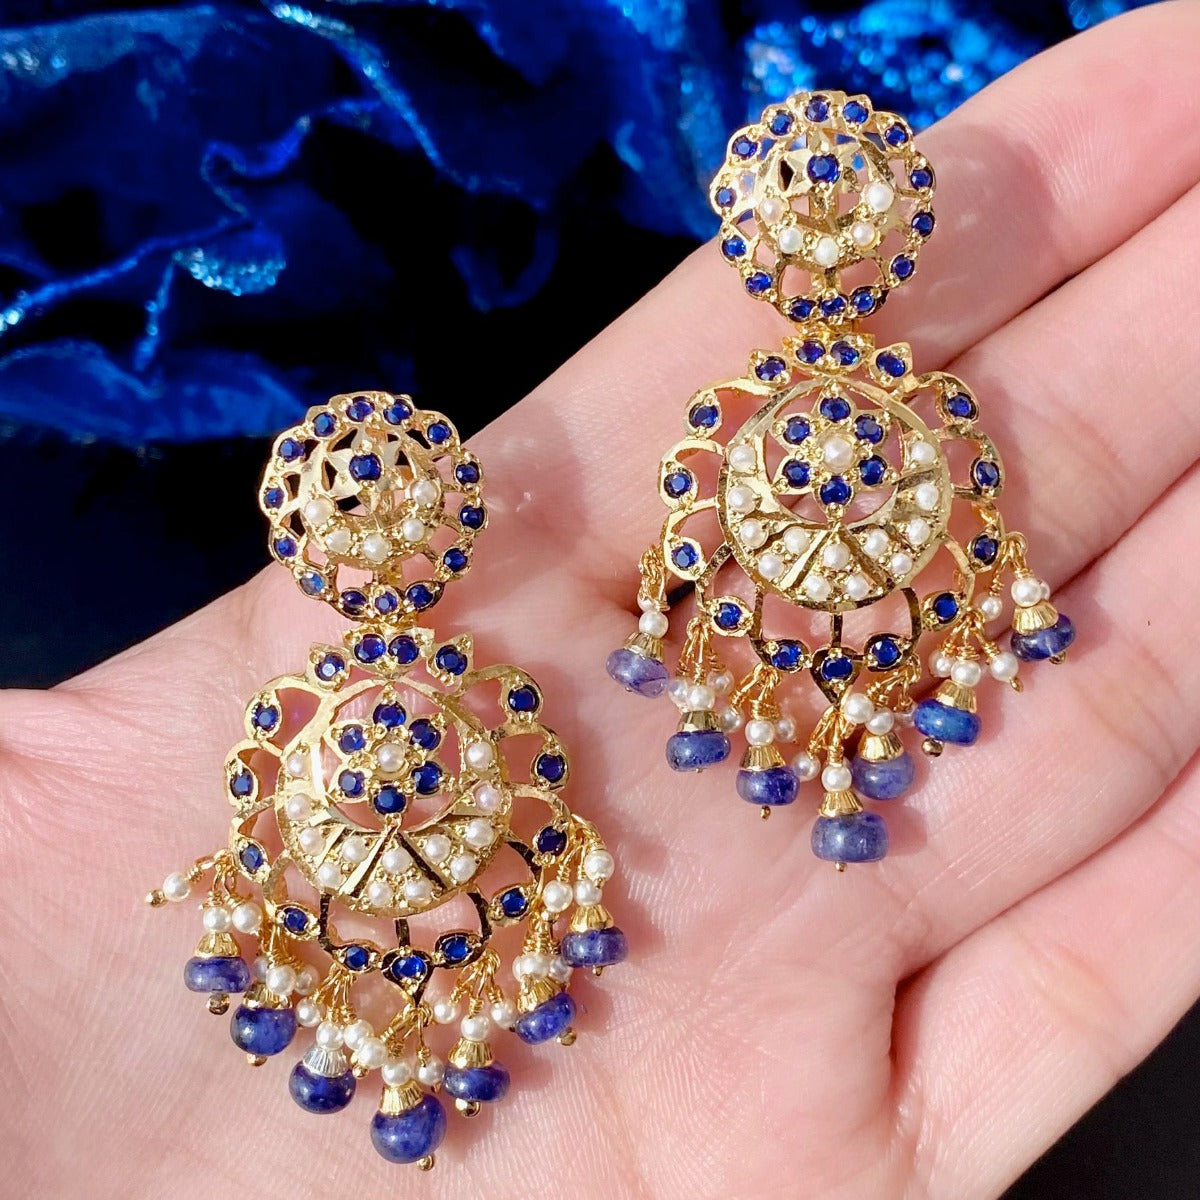 royal blue earrings